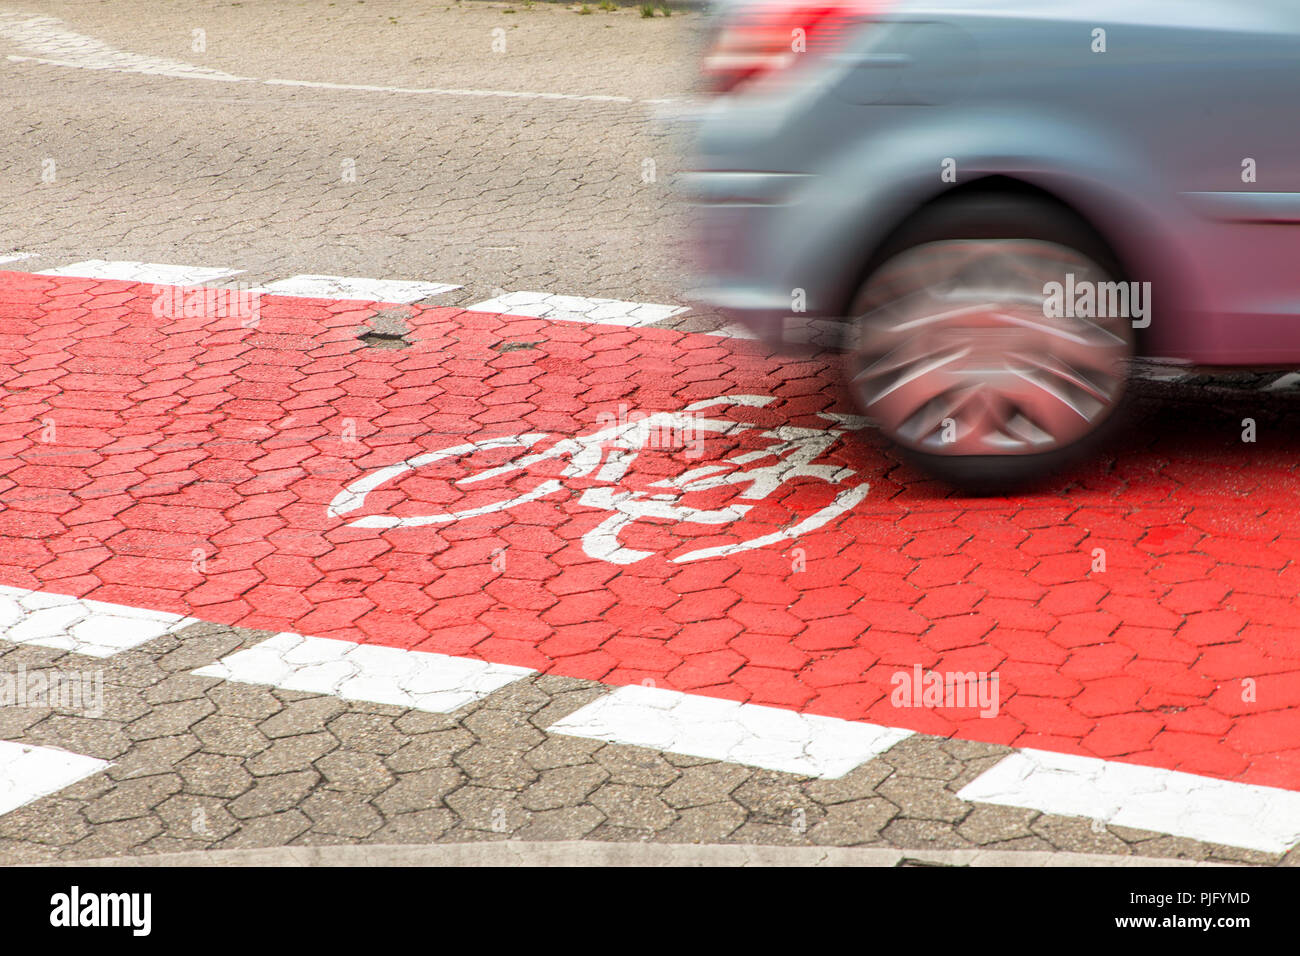 Radweg, extra groß markierte Fahrradspur un einer Straße, en Bochum, Universitätsviertel, PKW kreuz den Fahrradweg, Foto de stock